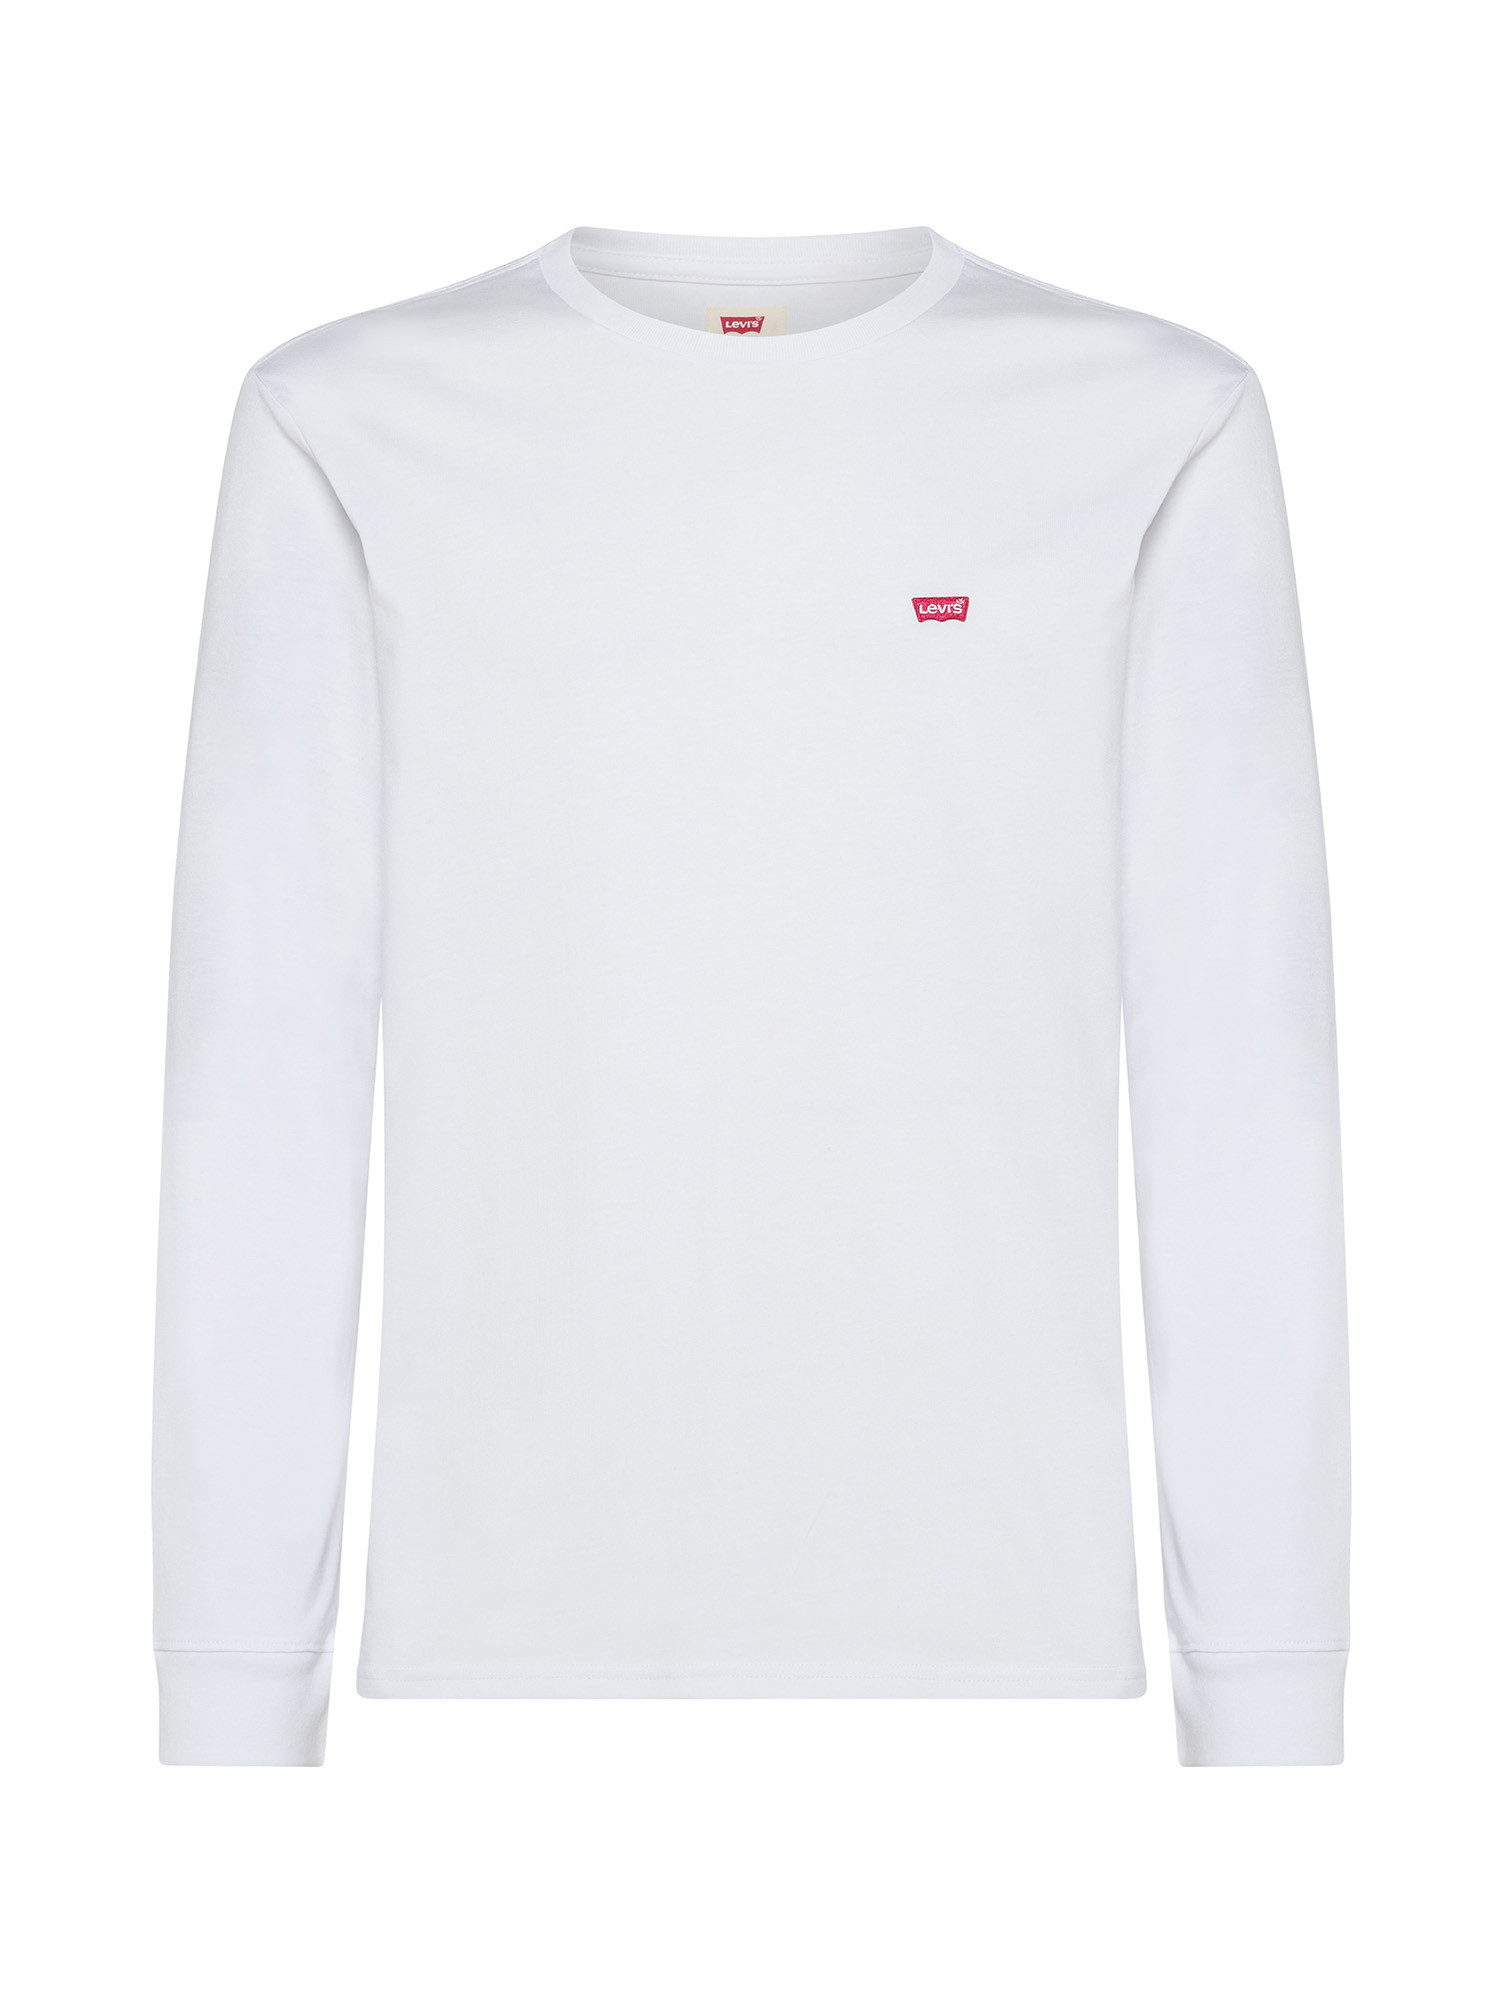 Levi's - Solid color crewneck T-shirt, White, large image number 0